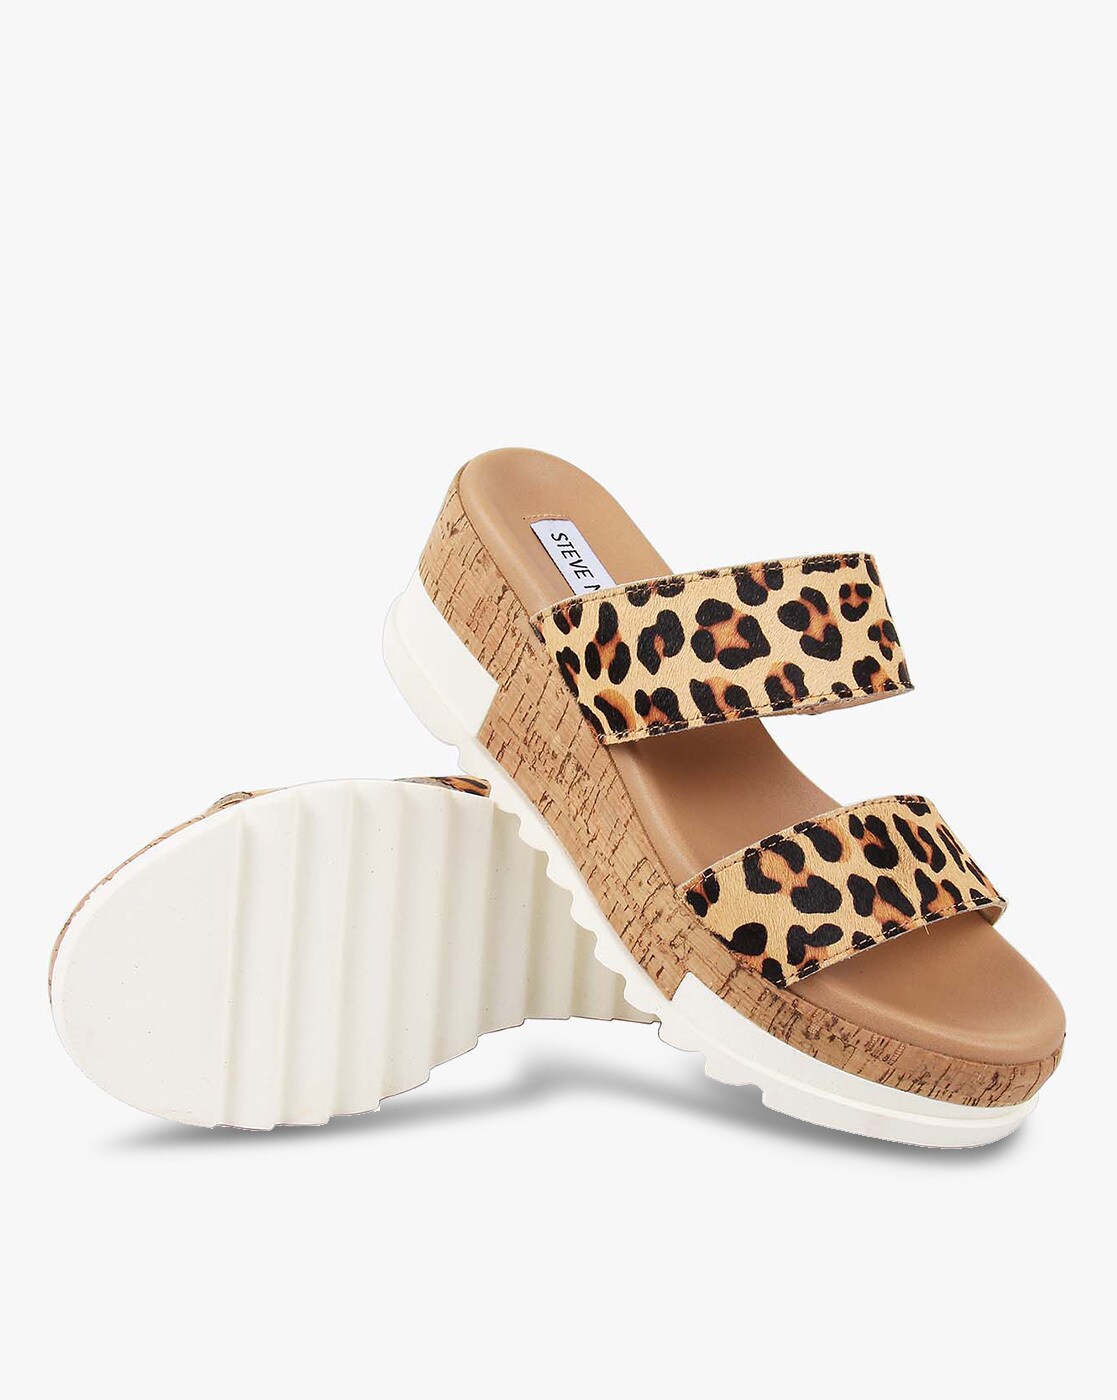 steve madden leopard print sandals